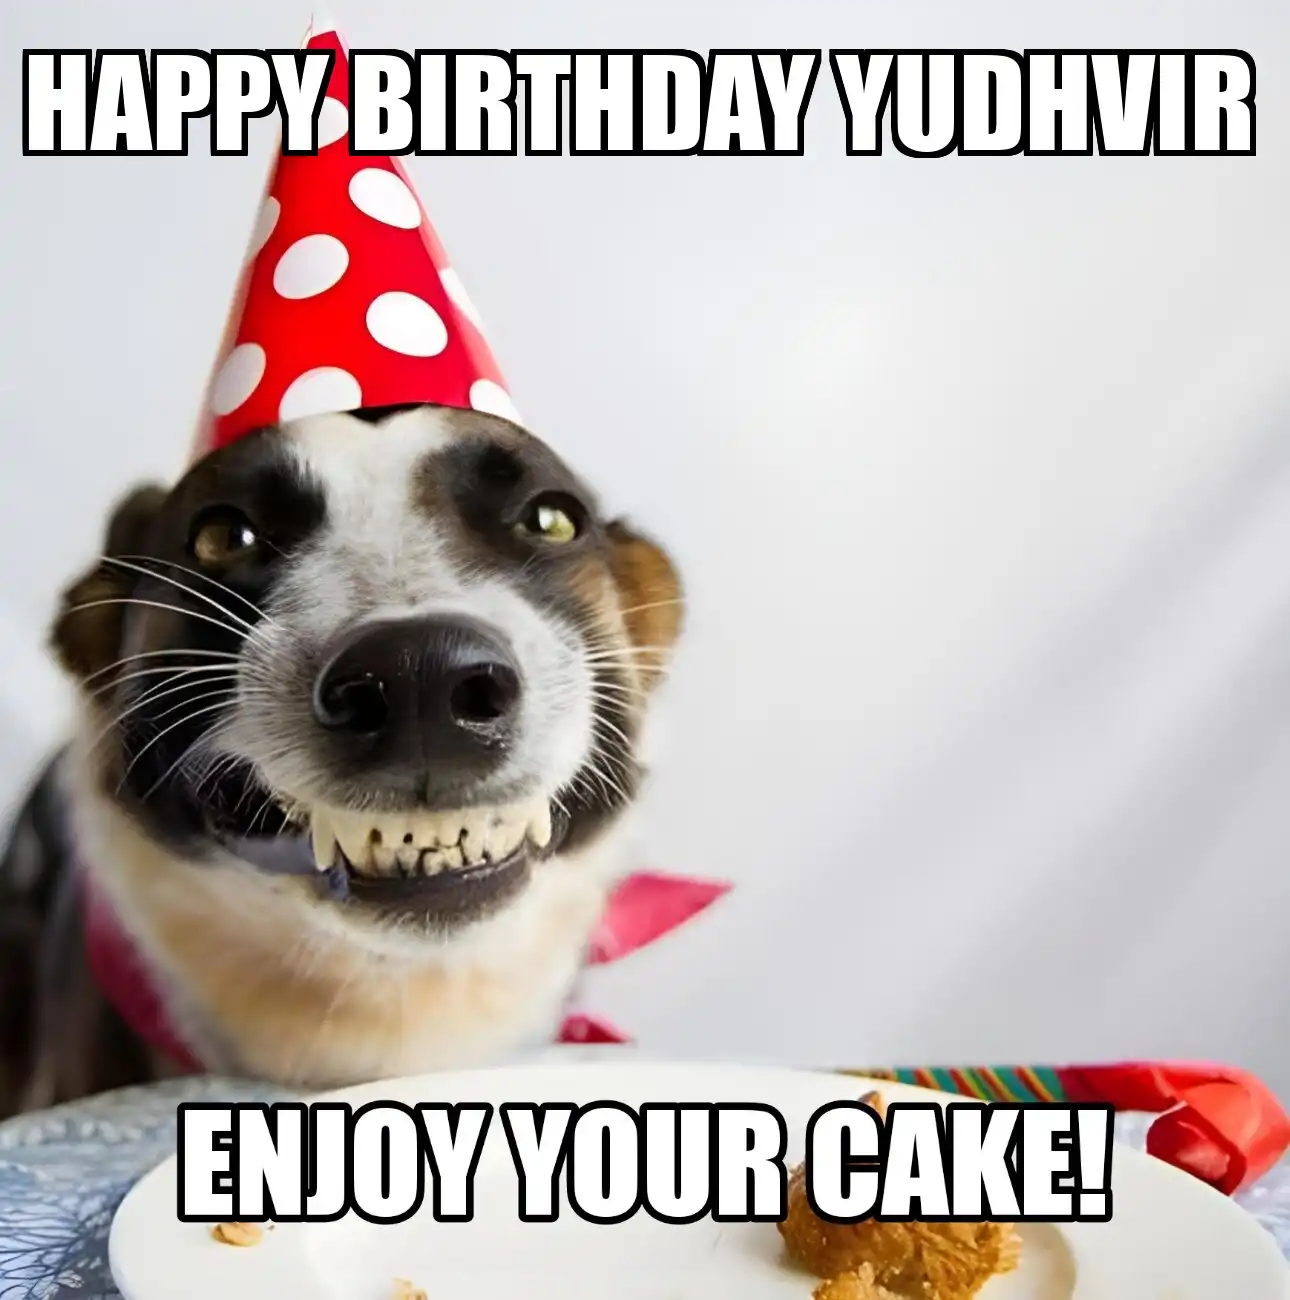 Happy Birthday Yudhvir Enjoy Your Cake Dog Meme